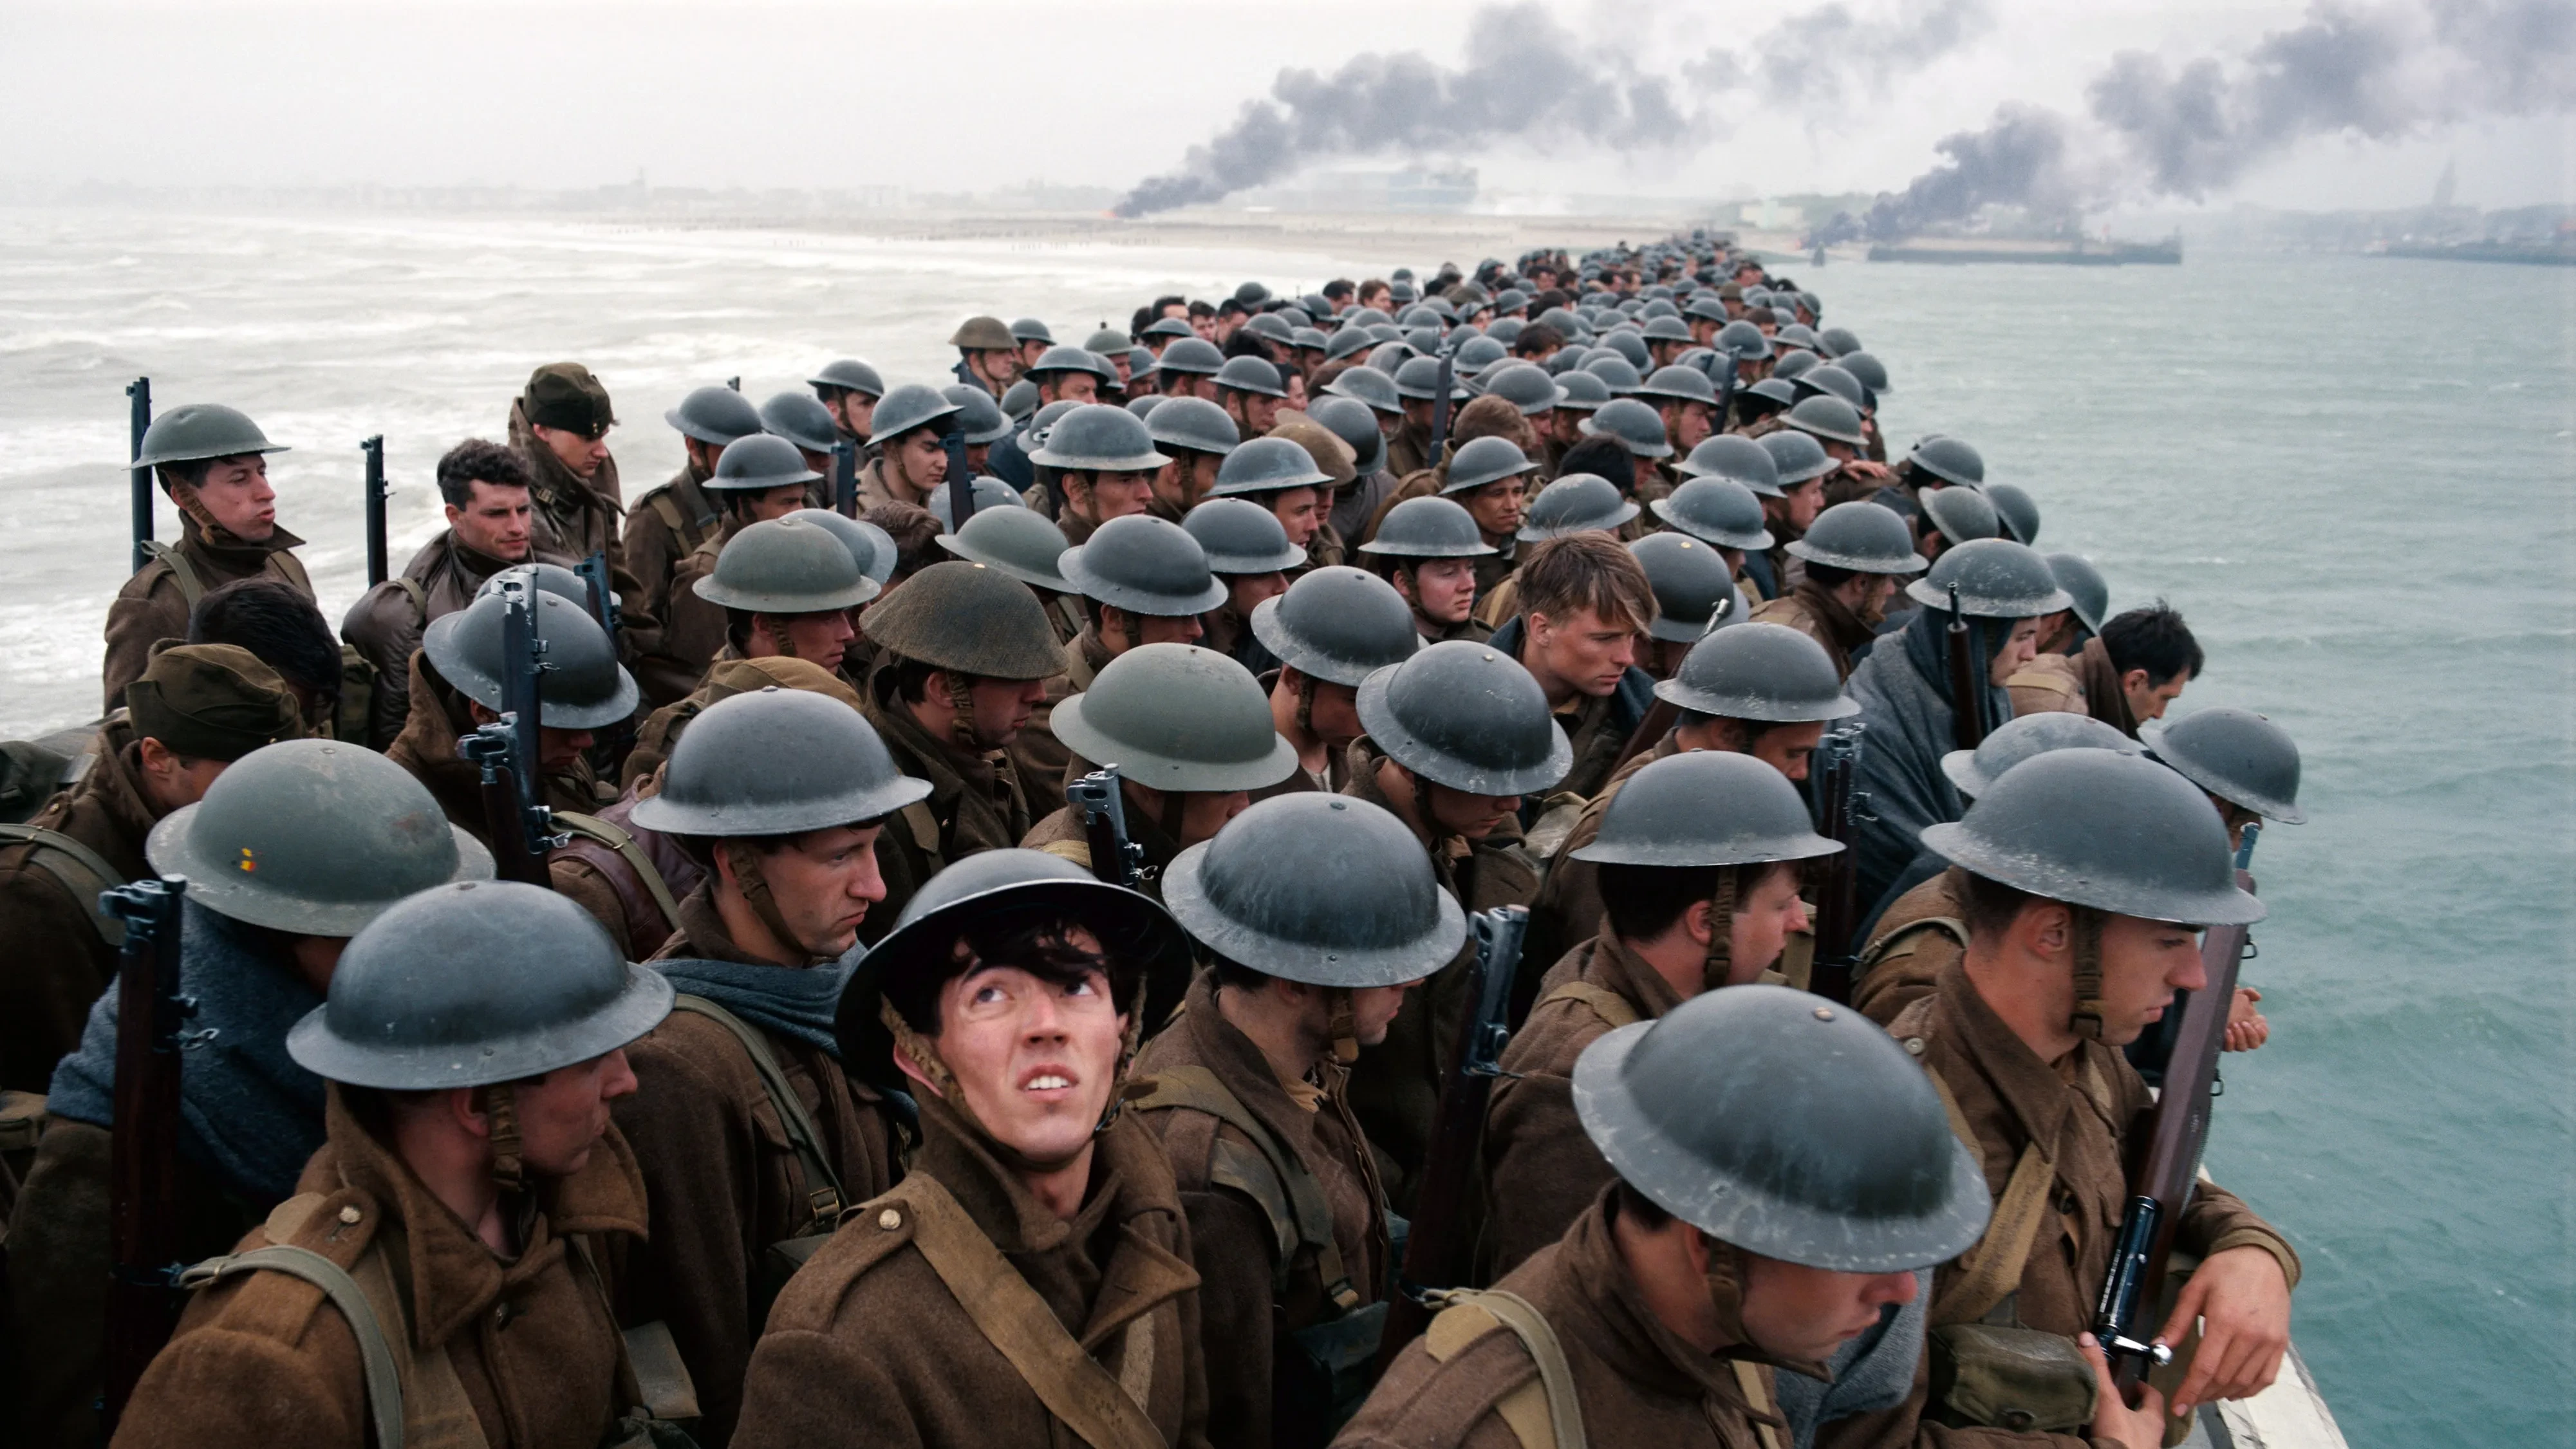 The Dunkirk (2017) movies cast - movies like Darkest Hour